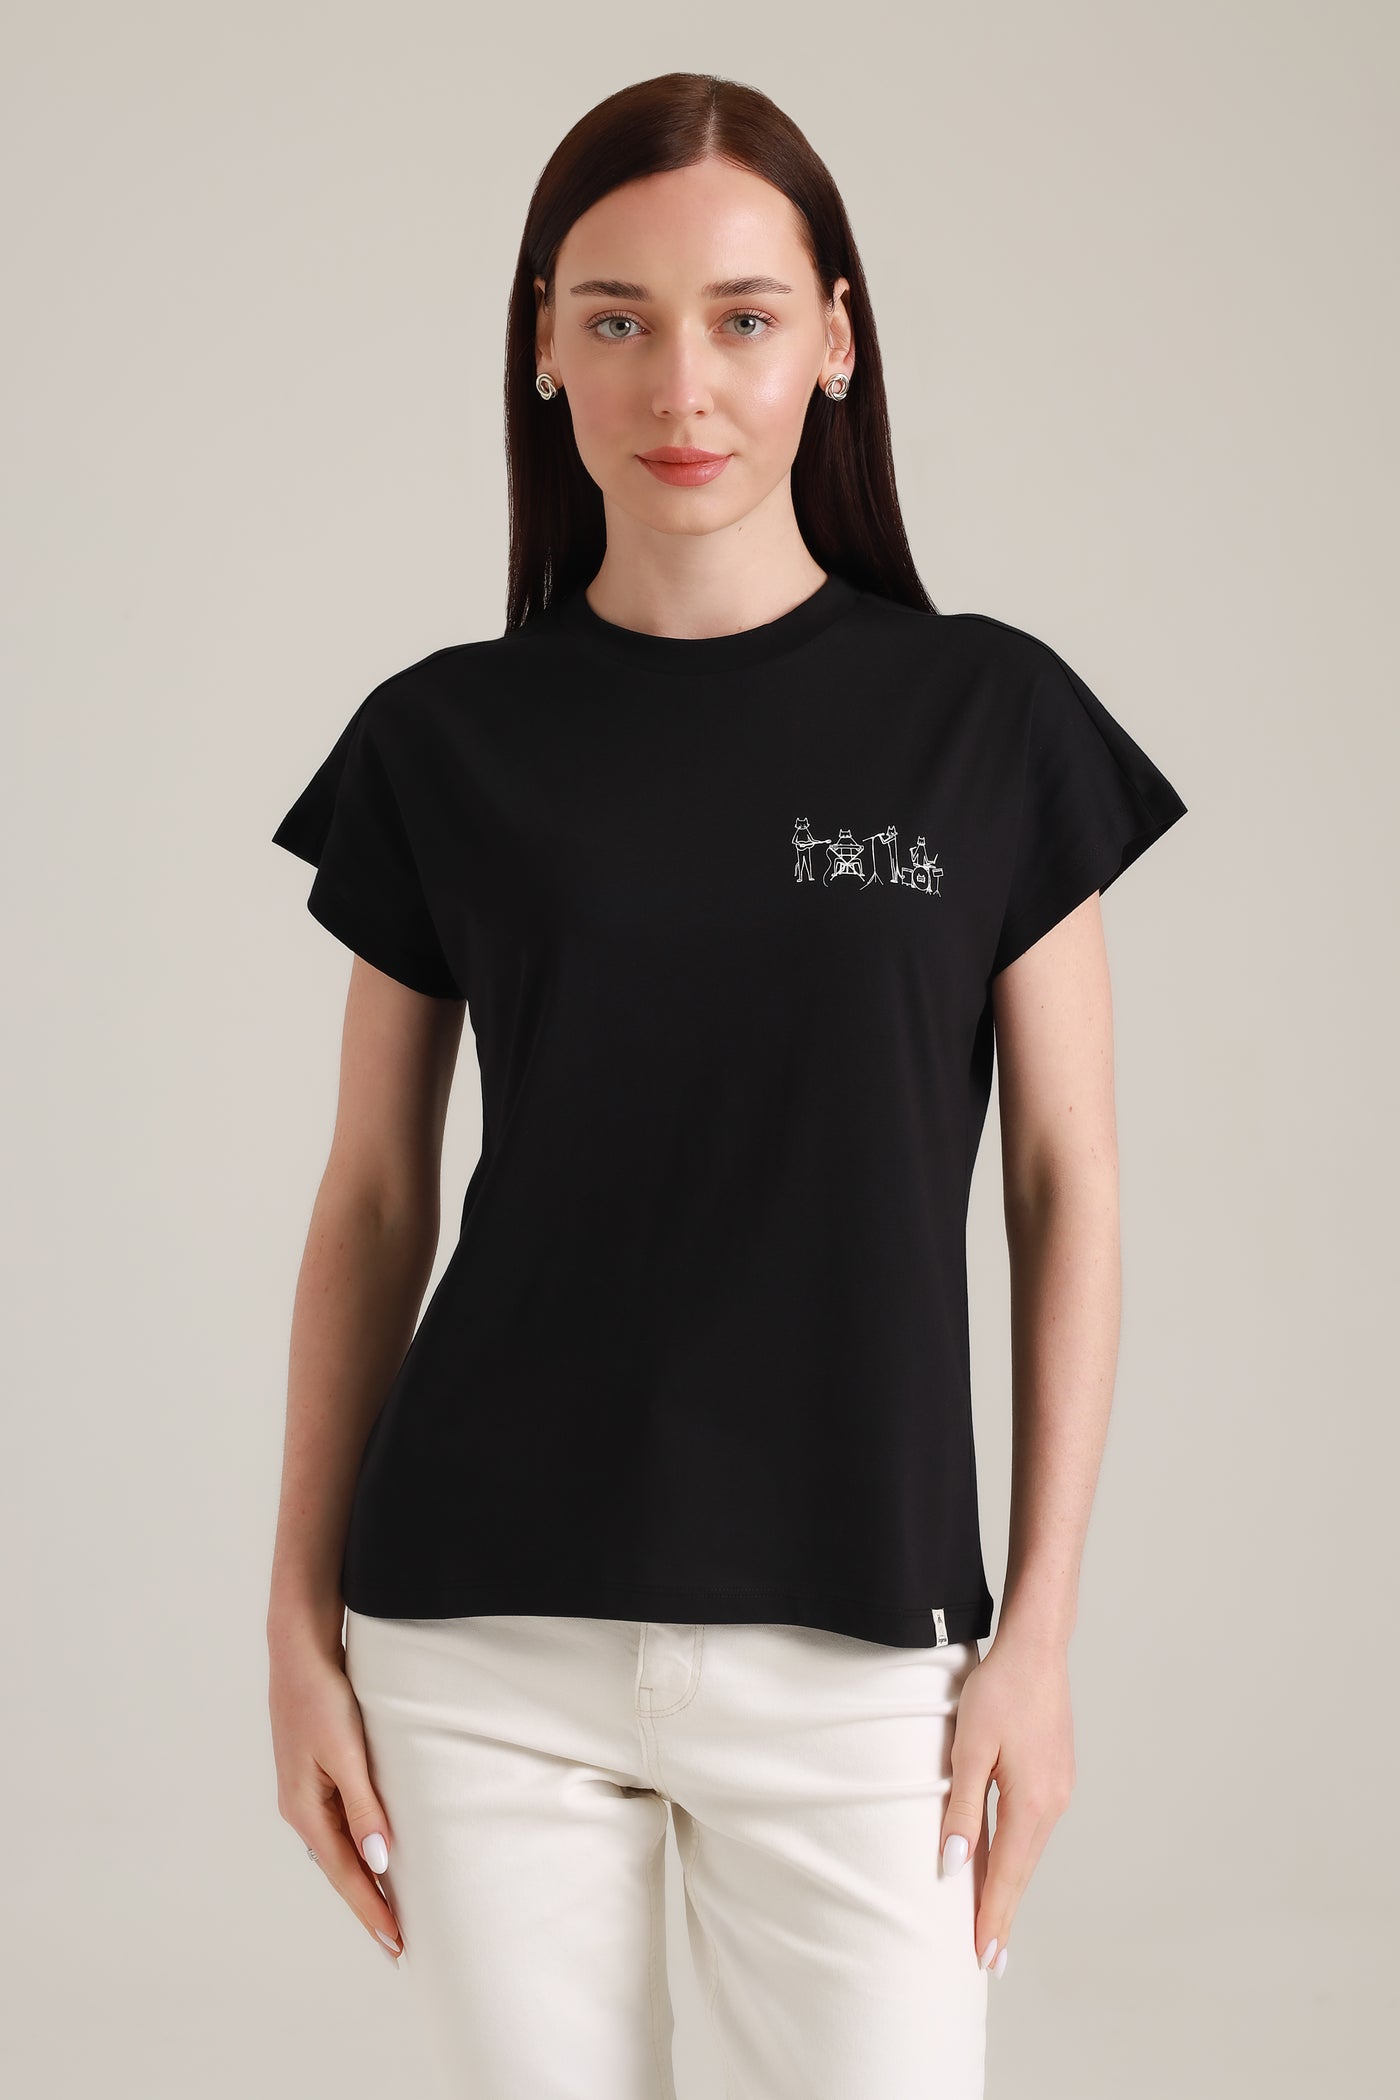 T-Shirt Women Short Sleeves Cat Band Black